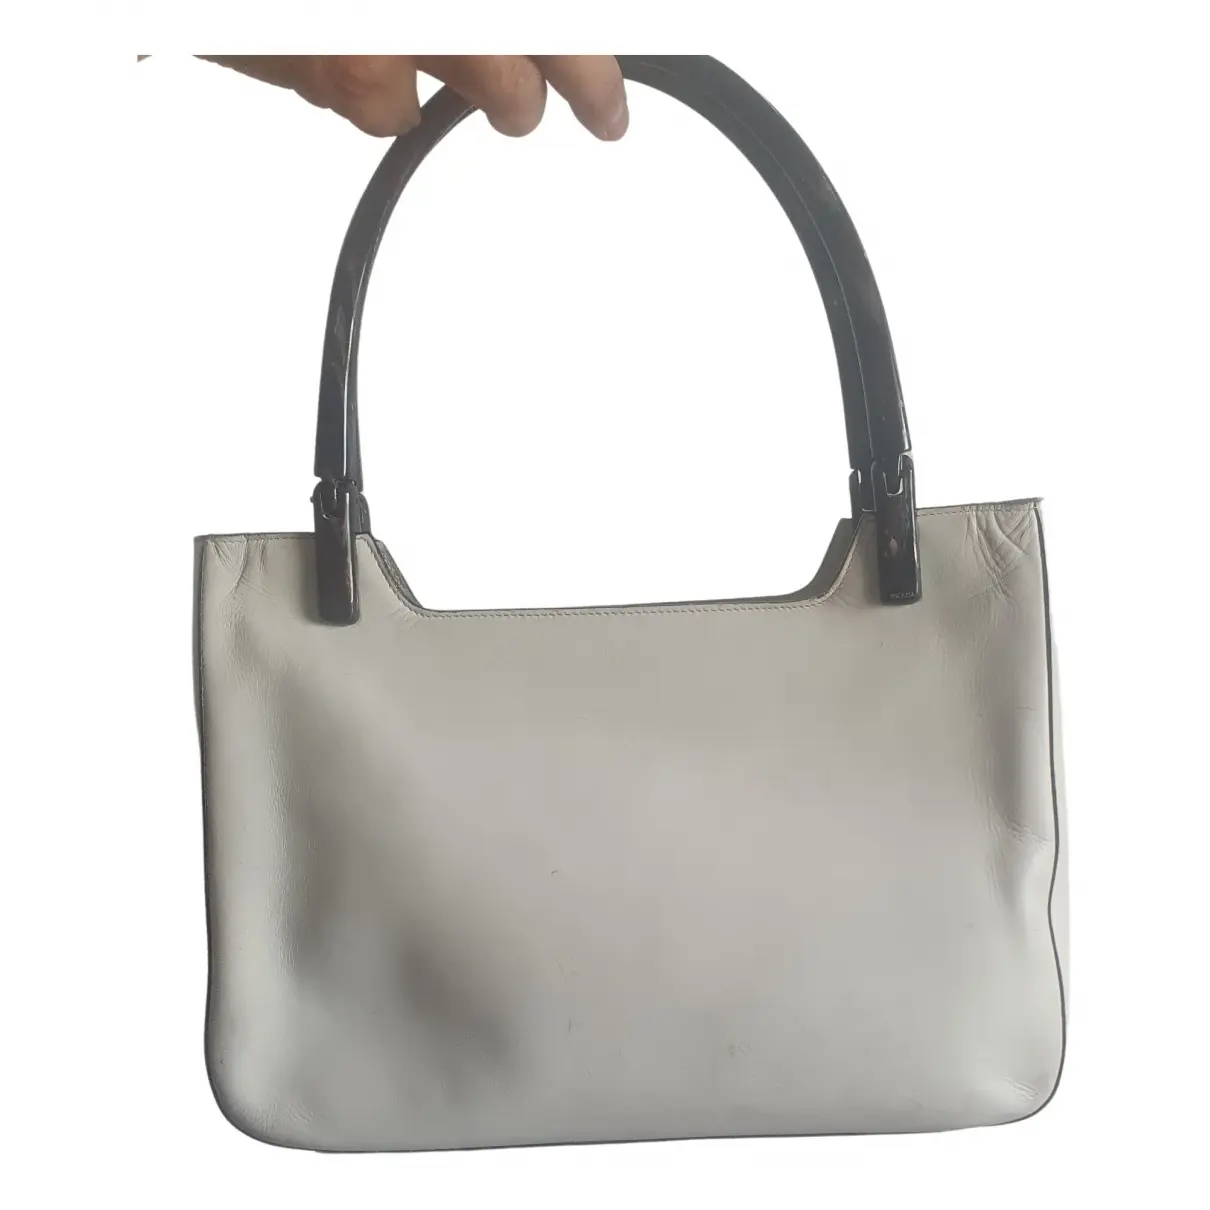 Buy Prada Mirage leather handbag online